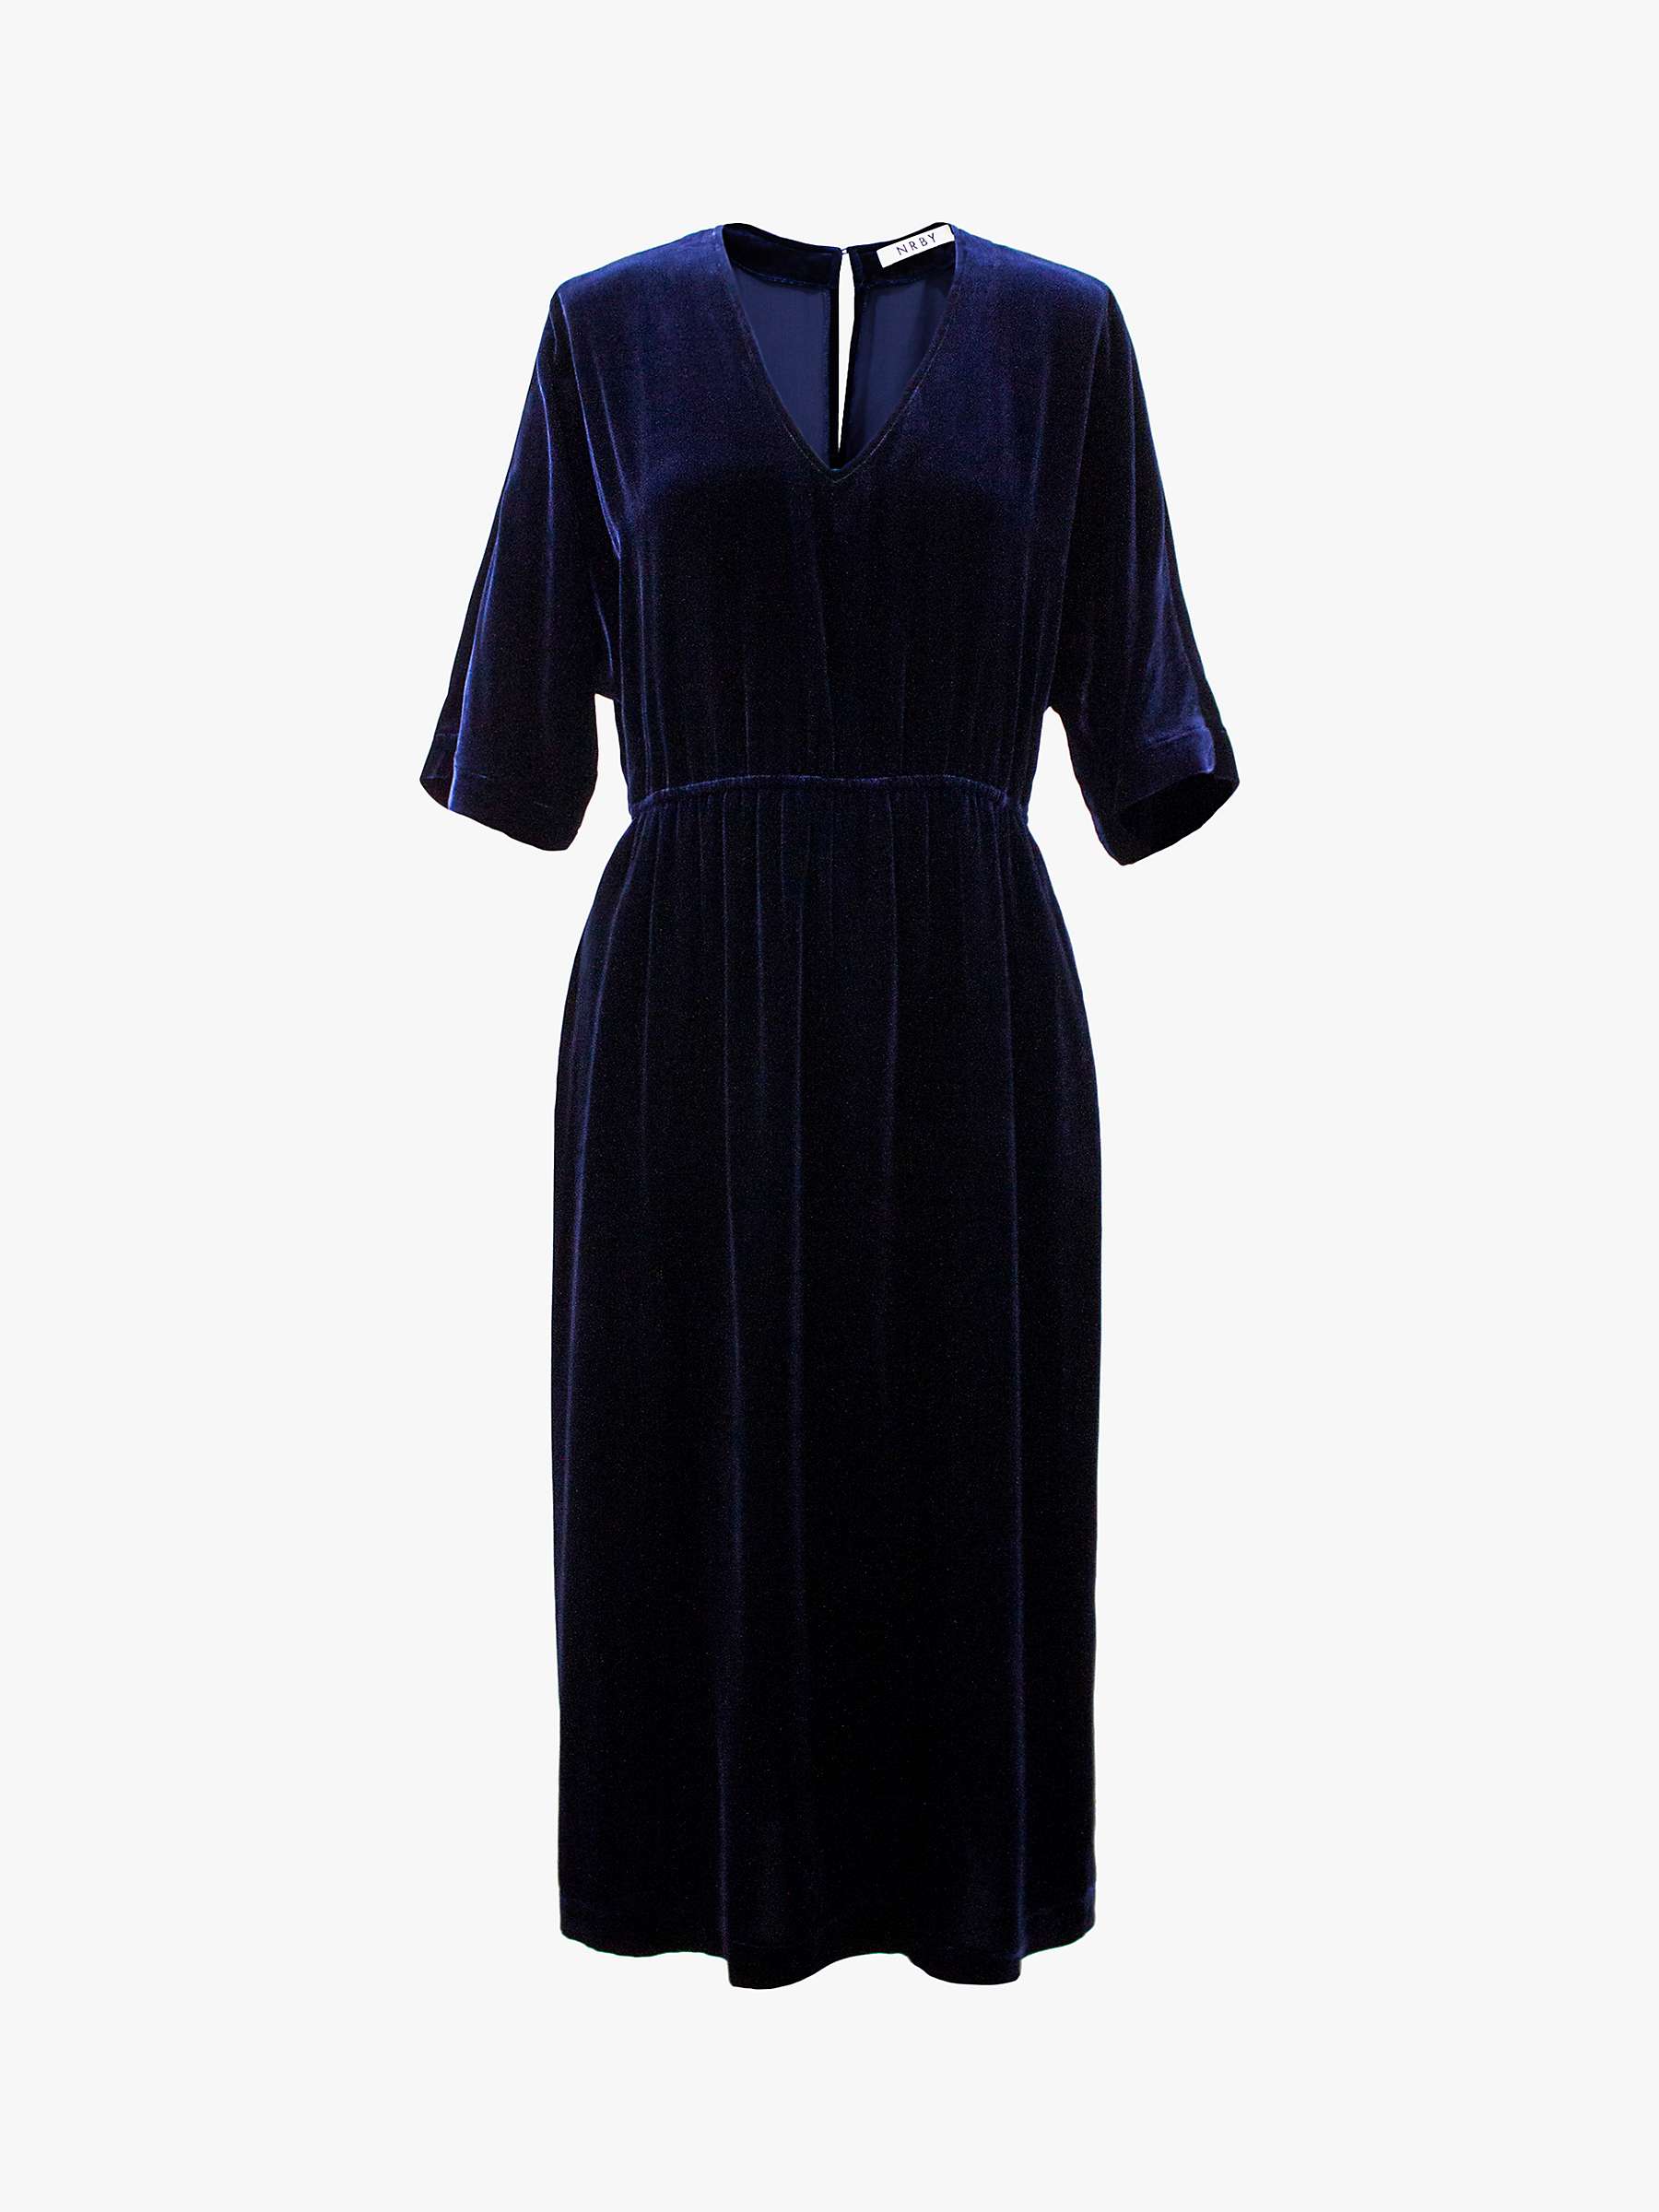 NRBY Zaza Silk Blend Velvet Midi Dress, Navy at John Lewis & Partners